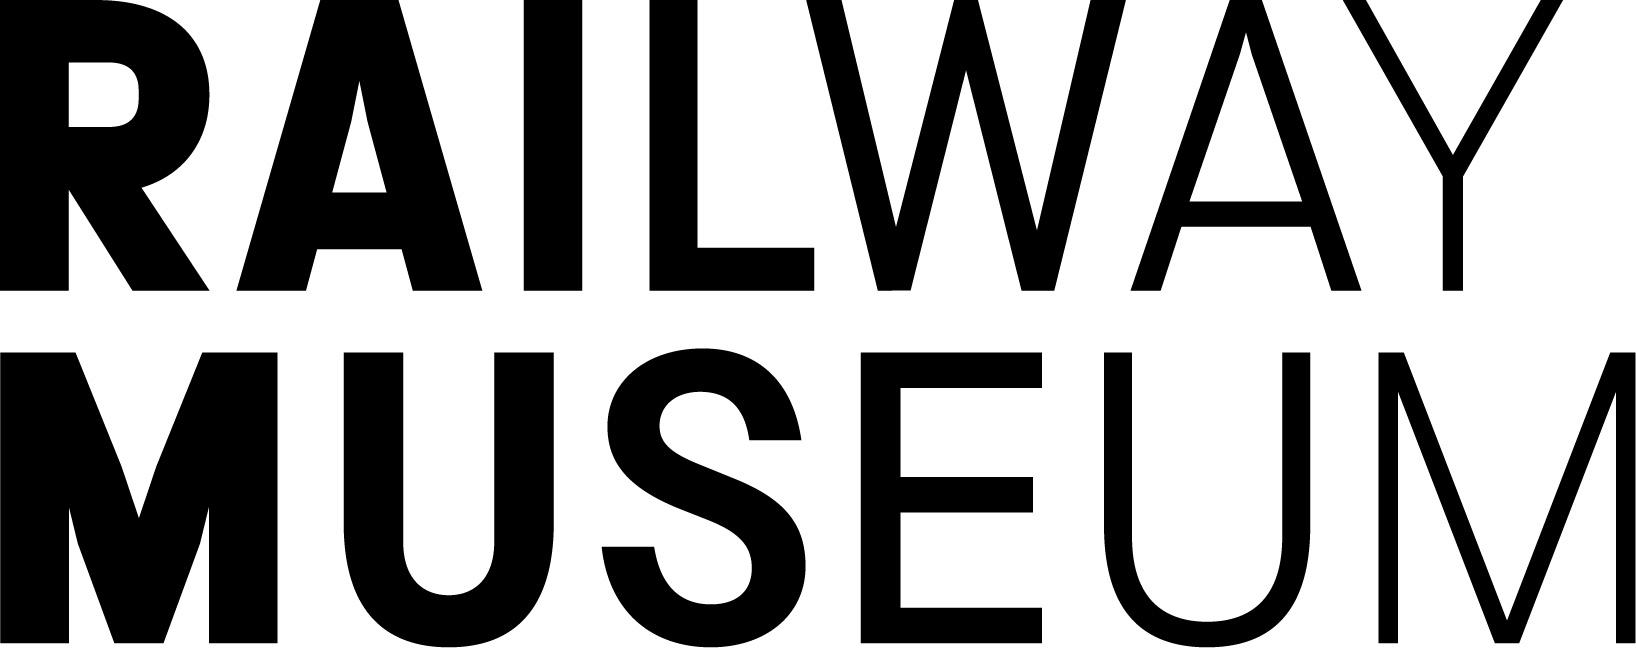 National Railway Museum logo